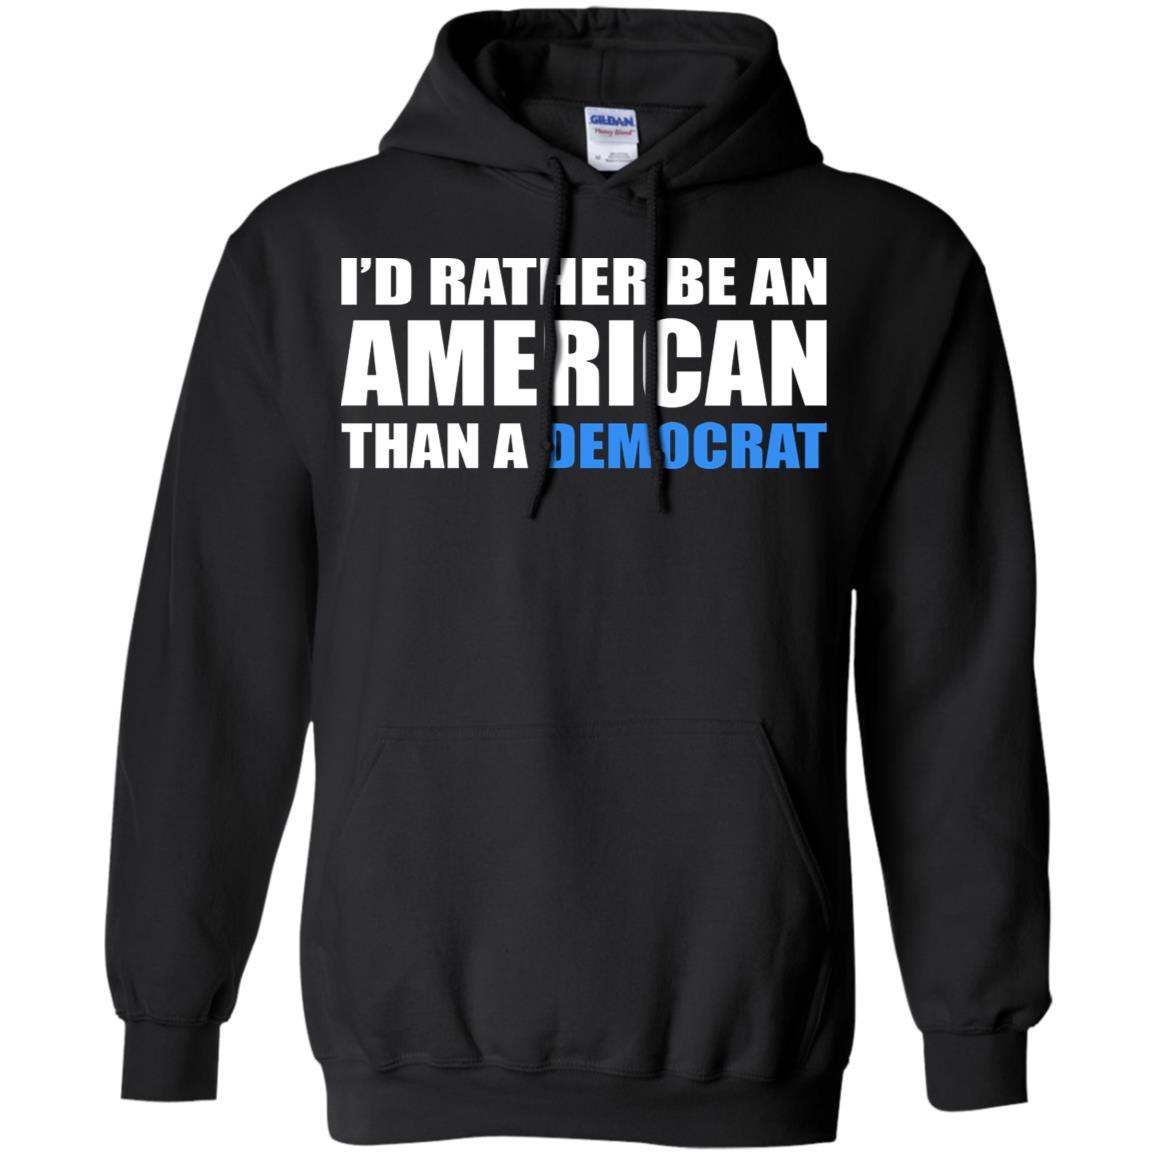 I’d Rather Be An American Than A Democrat shirt